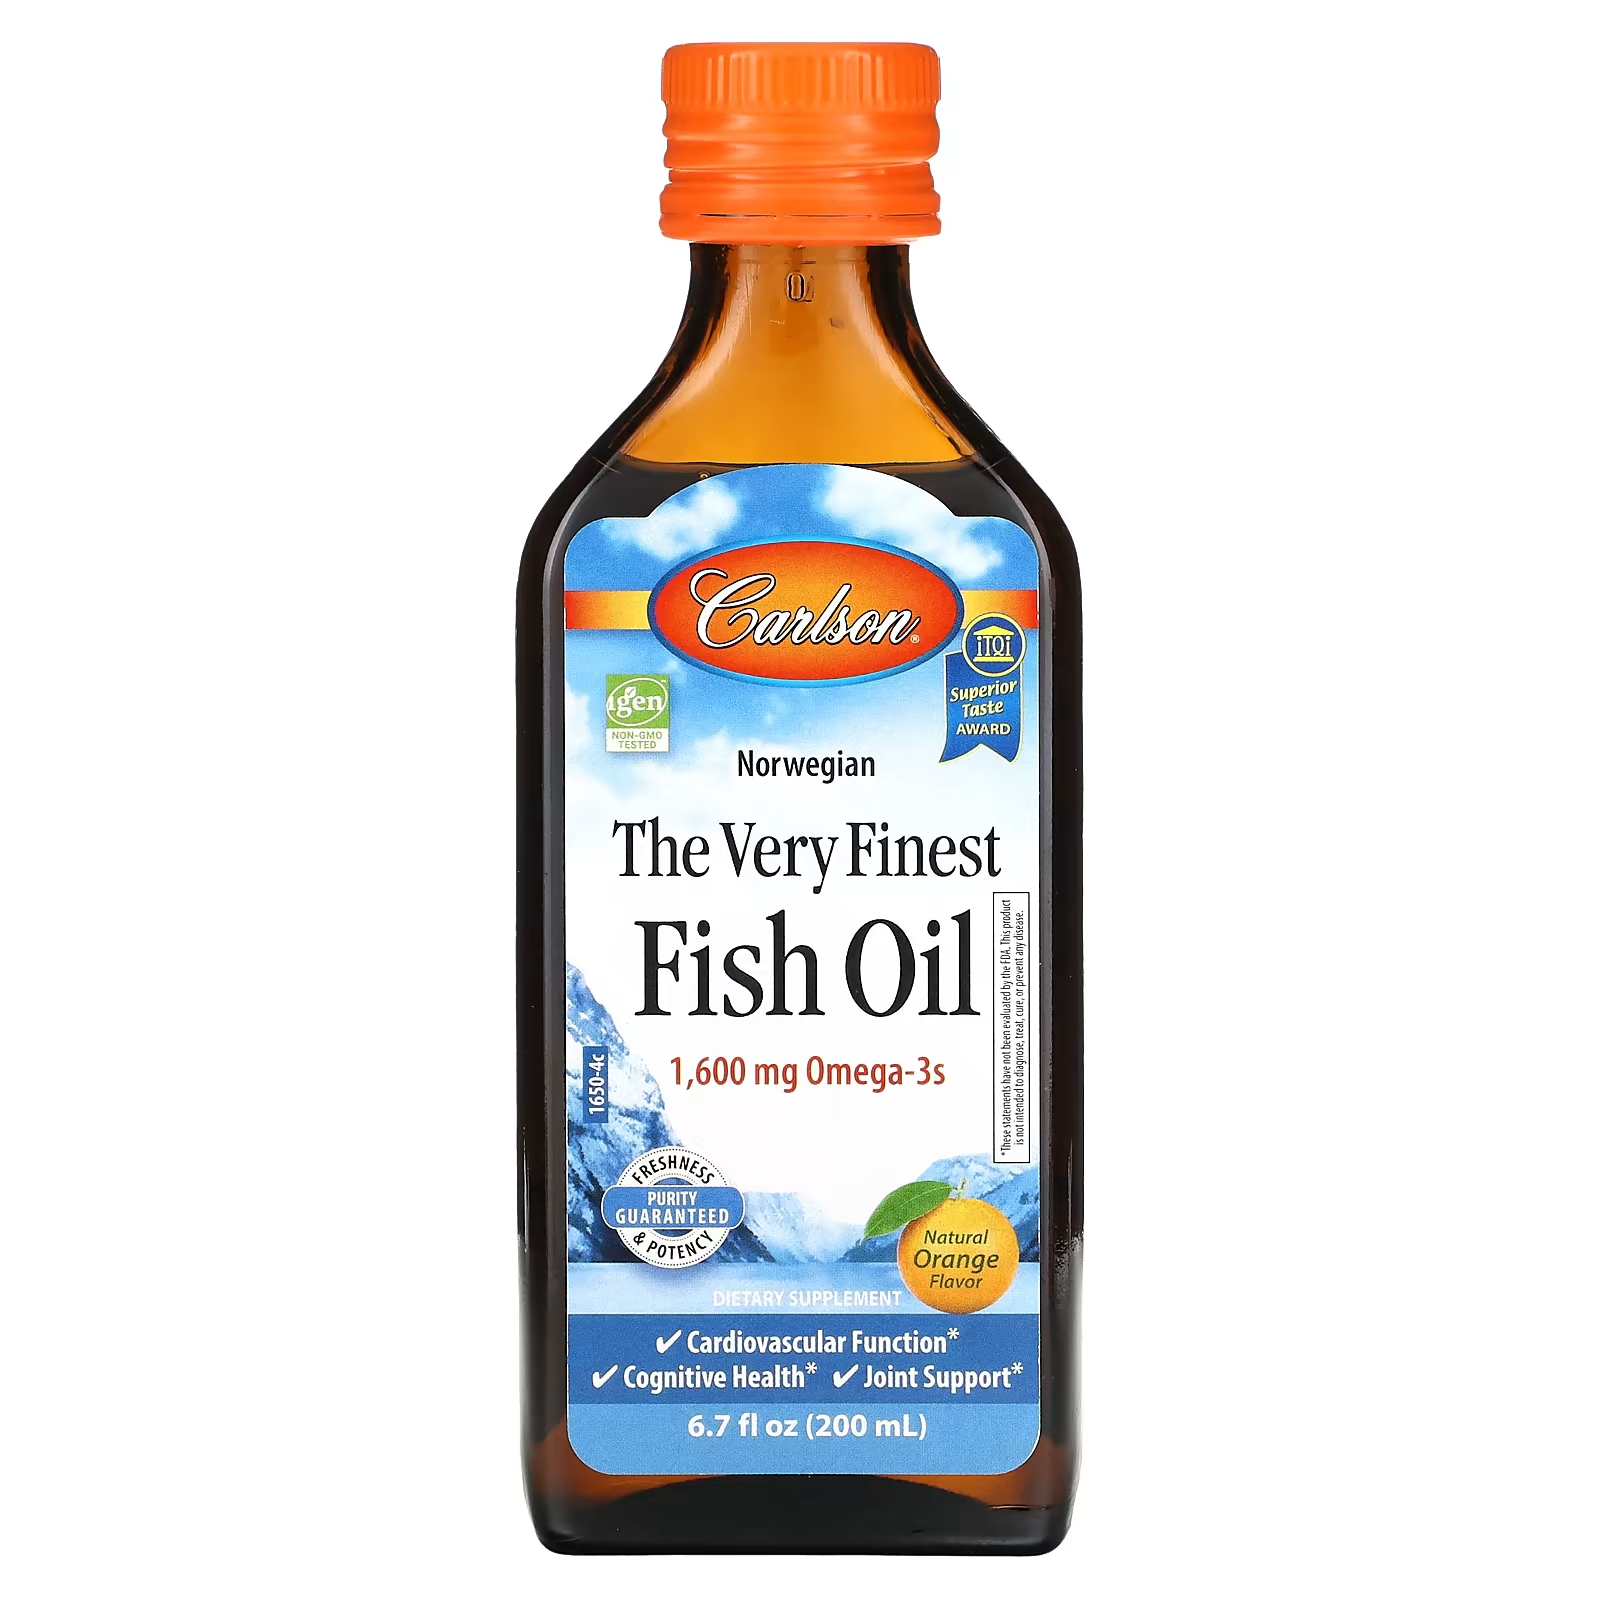 Пищевая добавка Carlson The Very Finest Fish Oil Natural Orange, 200 мл carlson the very finest fish oil just peachie 1 600 mg 6 7 fl oz 200 ml